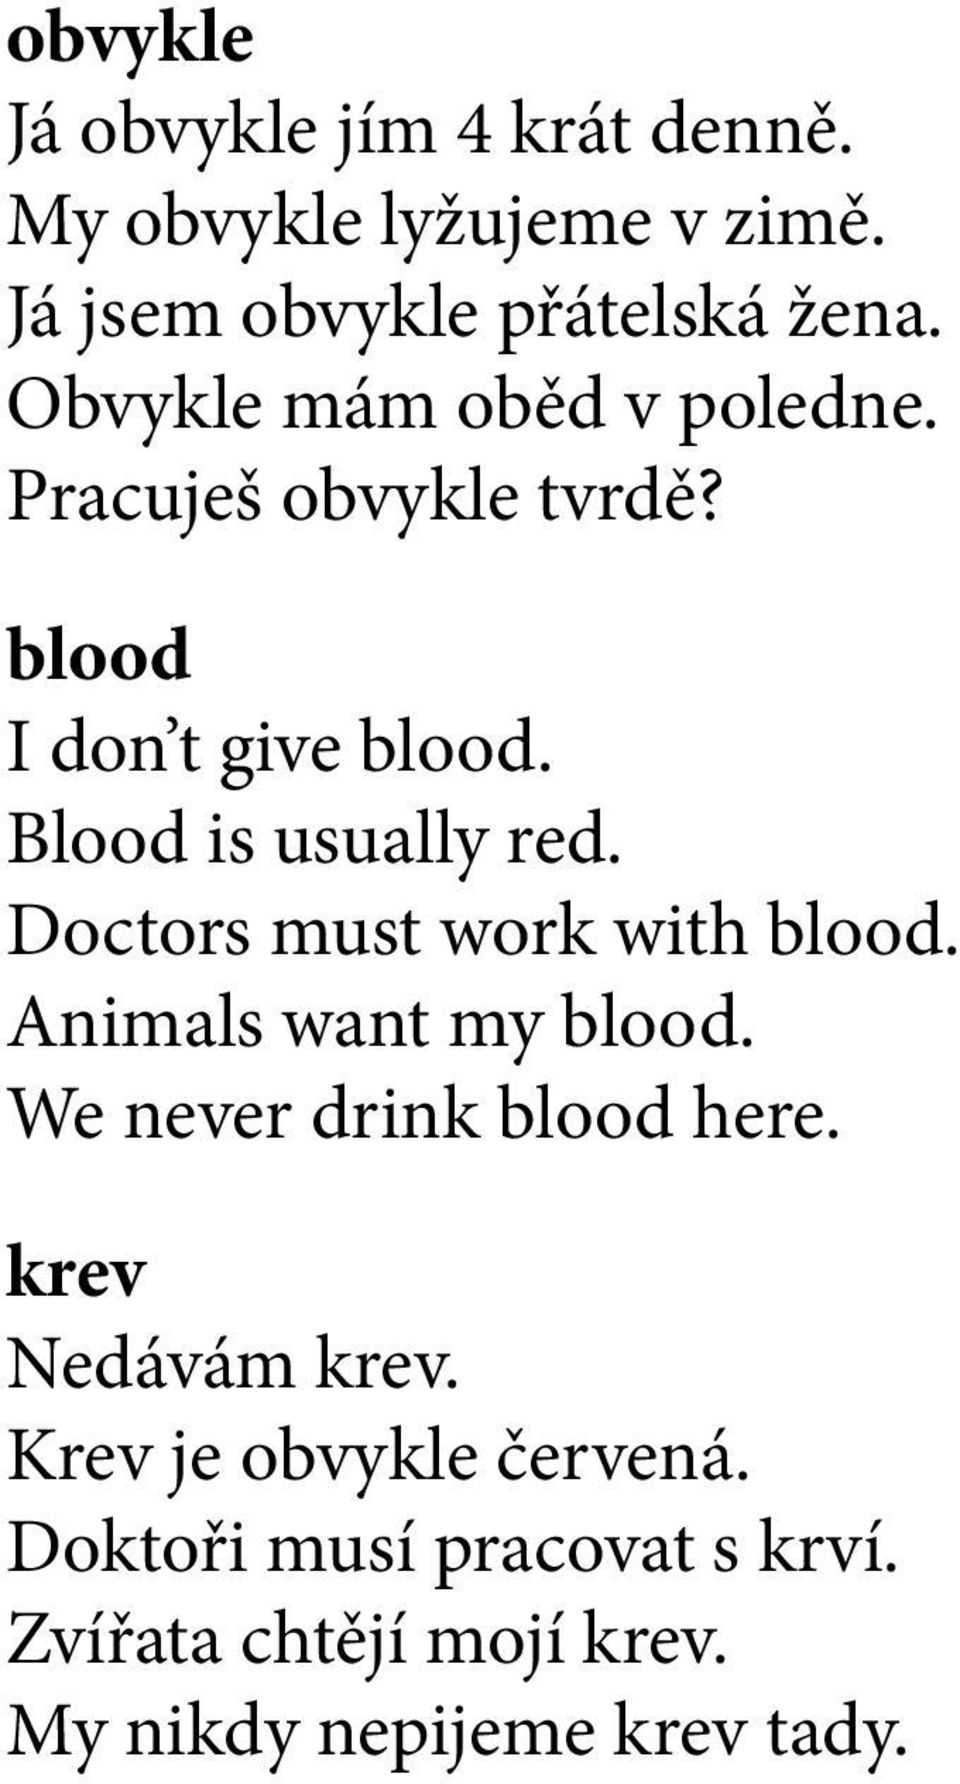 Doctors must work with blood. Animals want my blood. We never drink blood here. krev Nedávám krev.